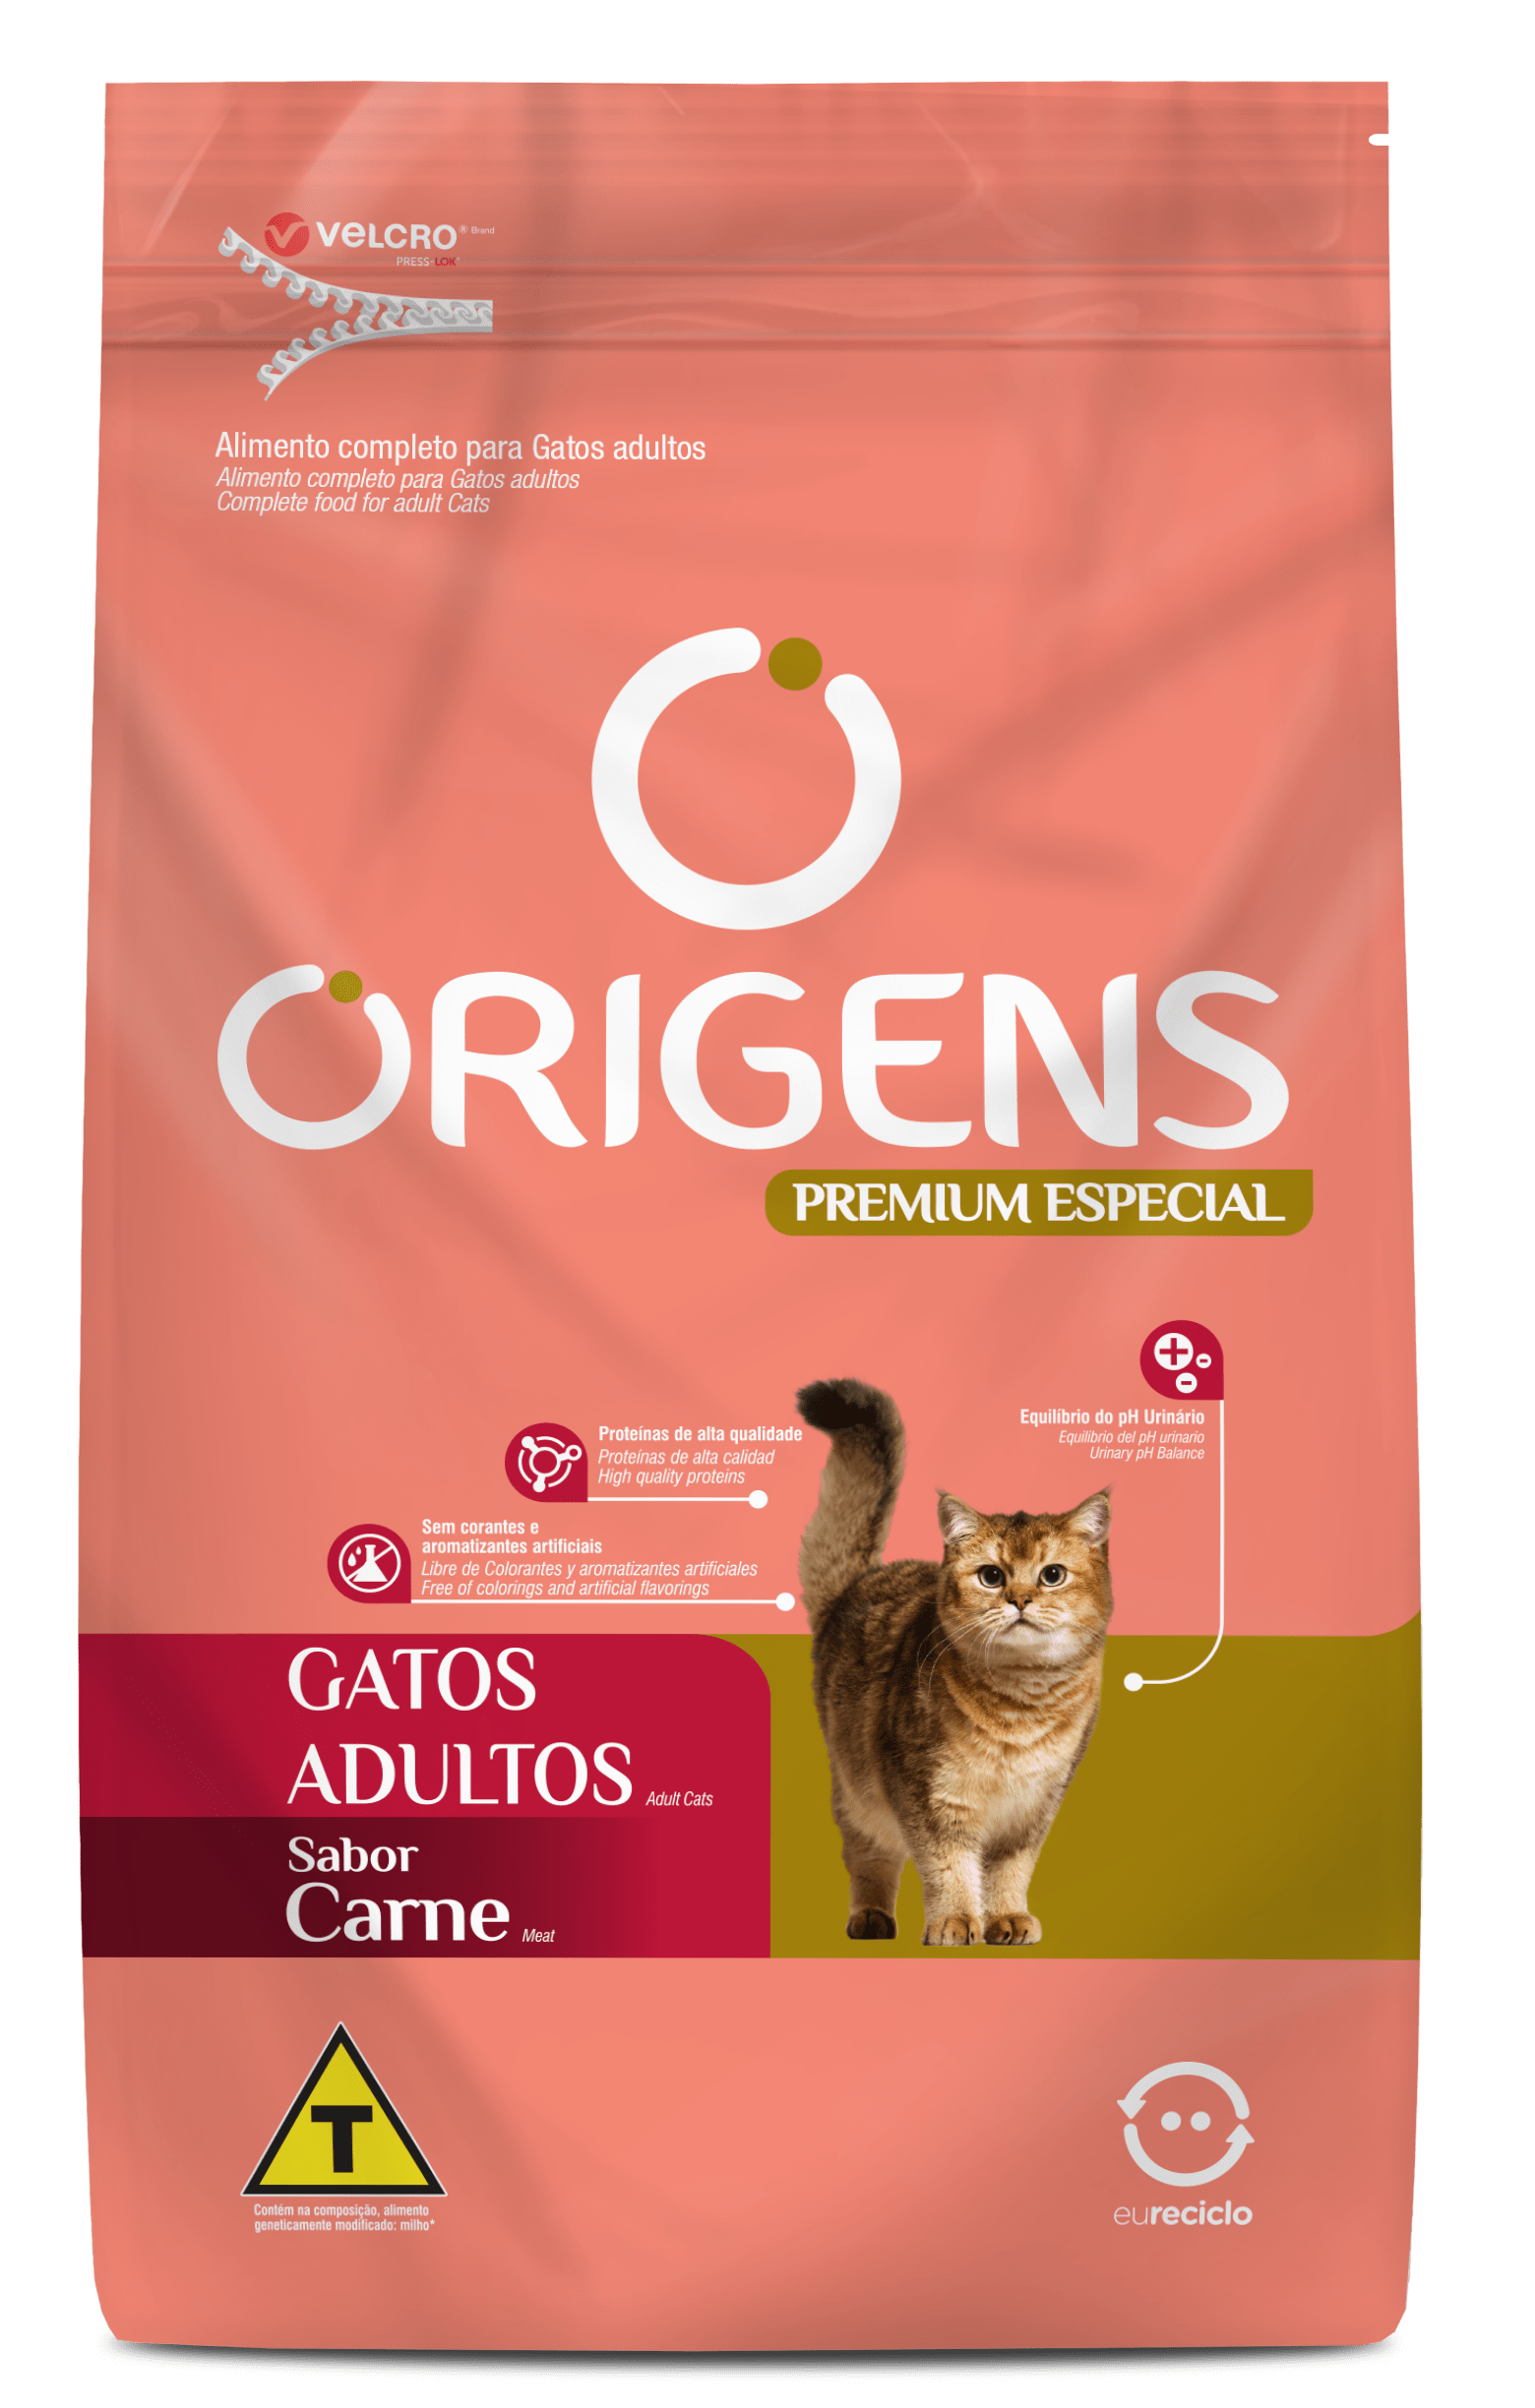 Origens Premium Especial Adult Cats Beef Flavor